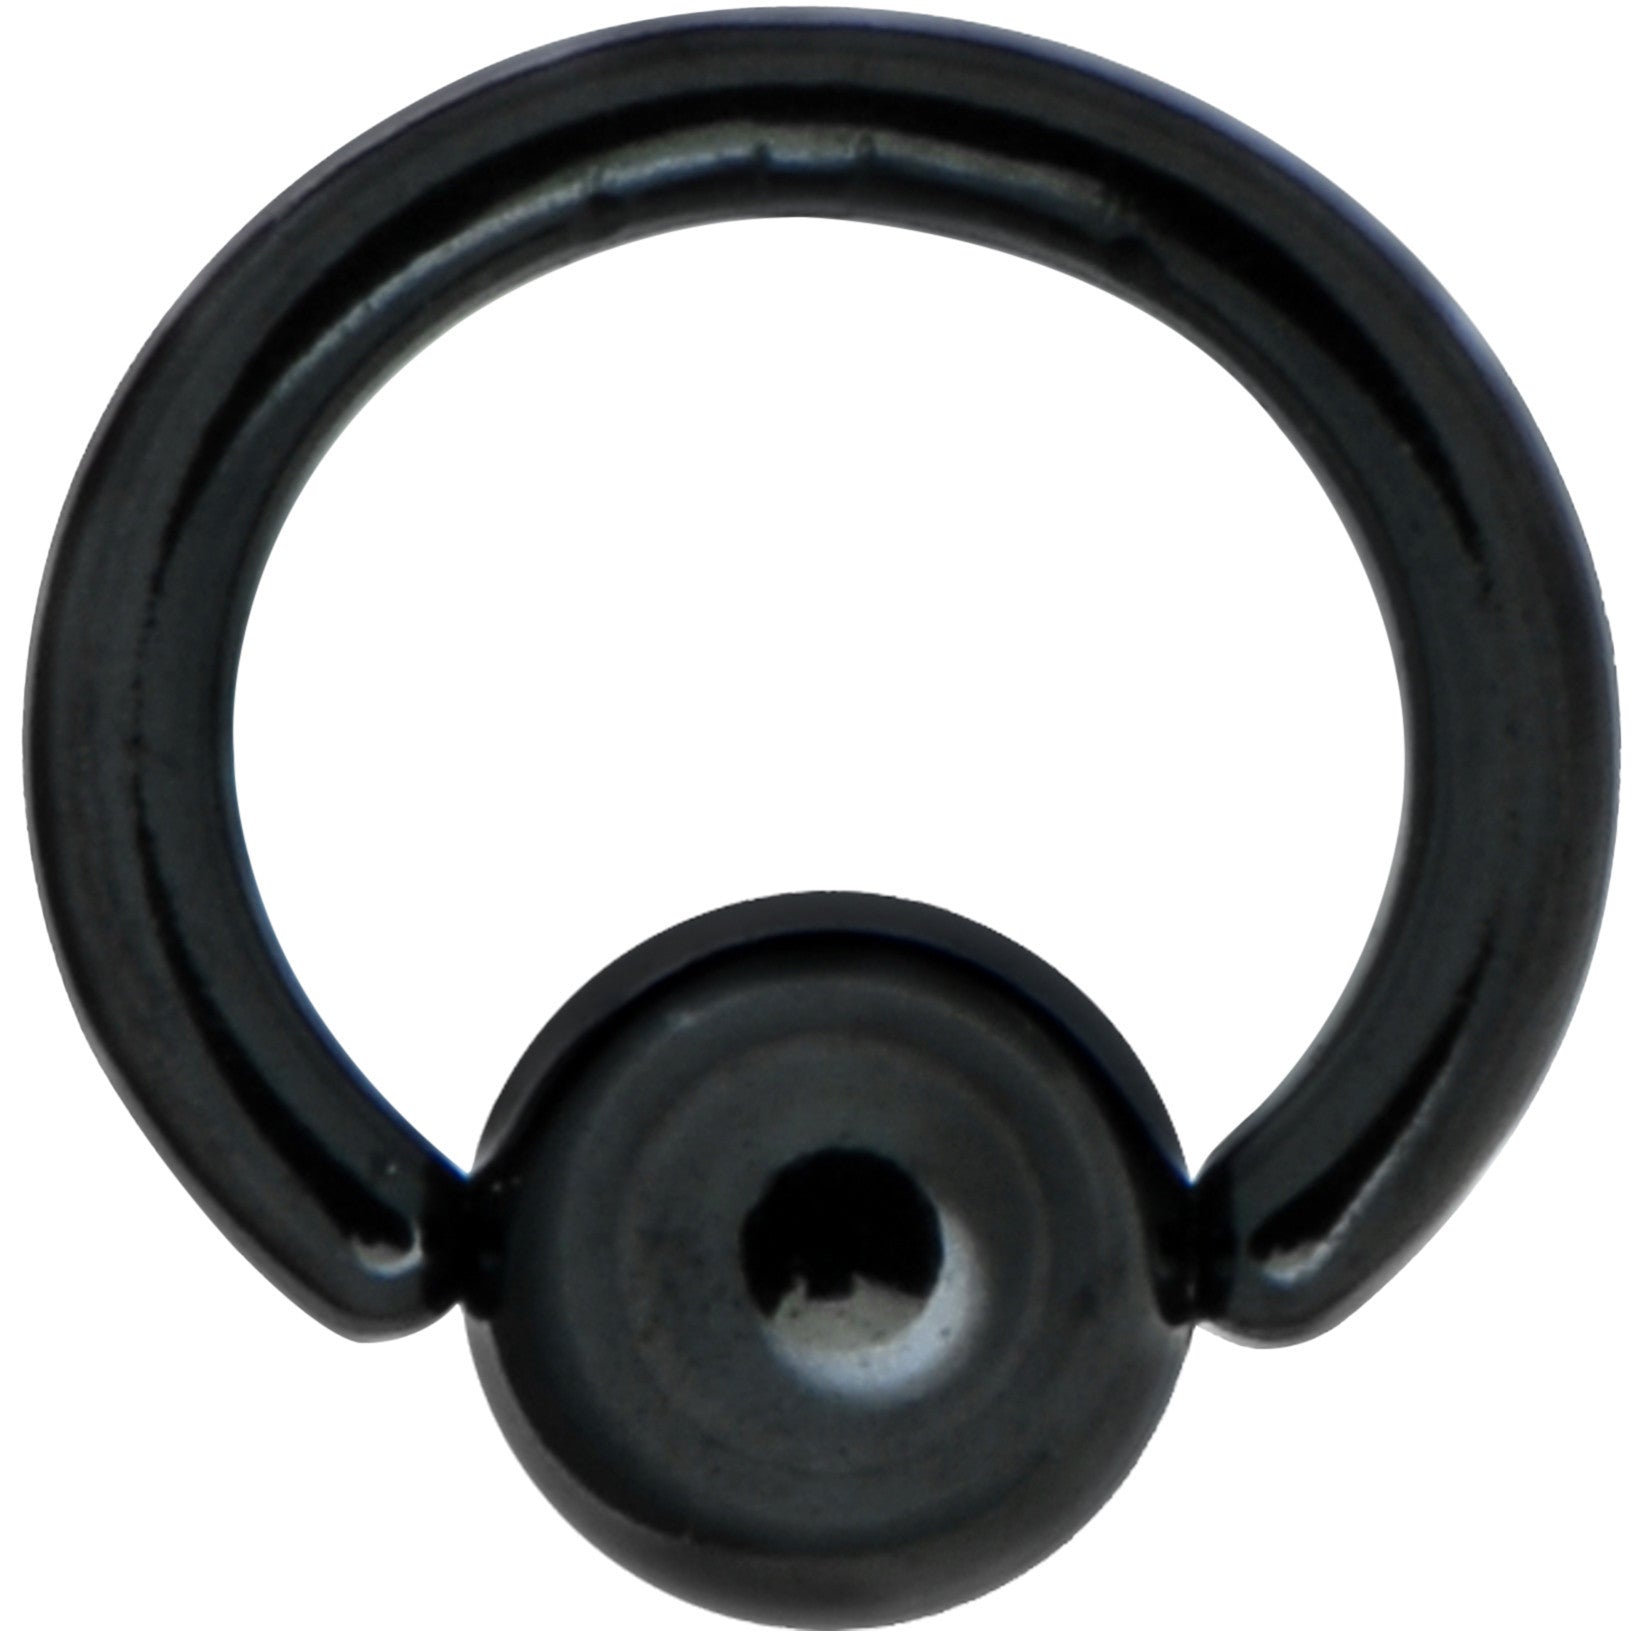 16 Gauge 1/4 Black Anodized Titanium Ball Captive Ring